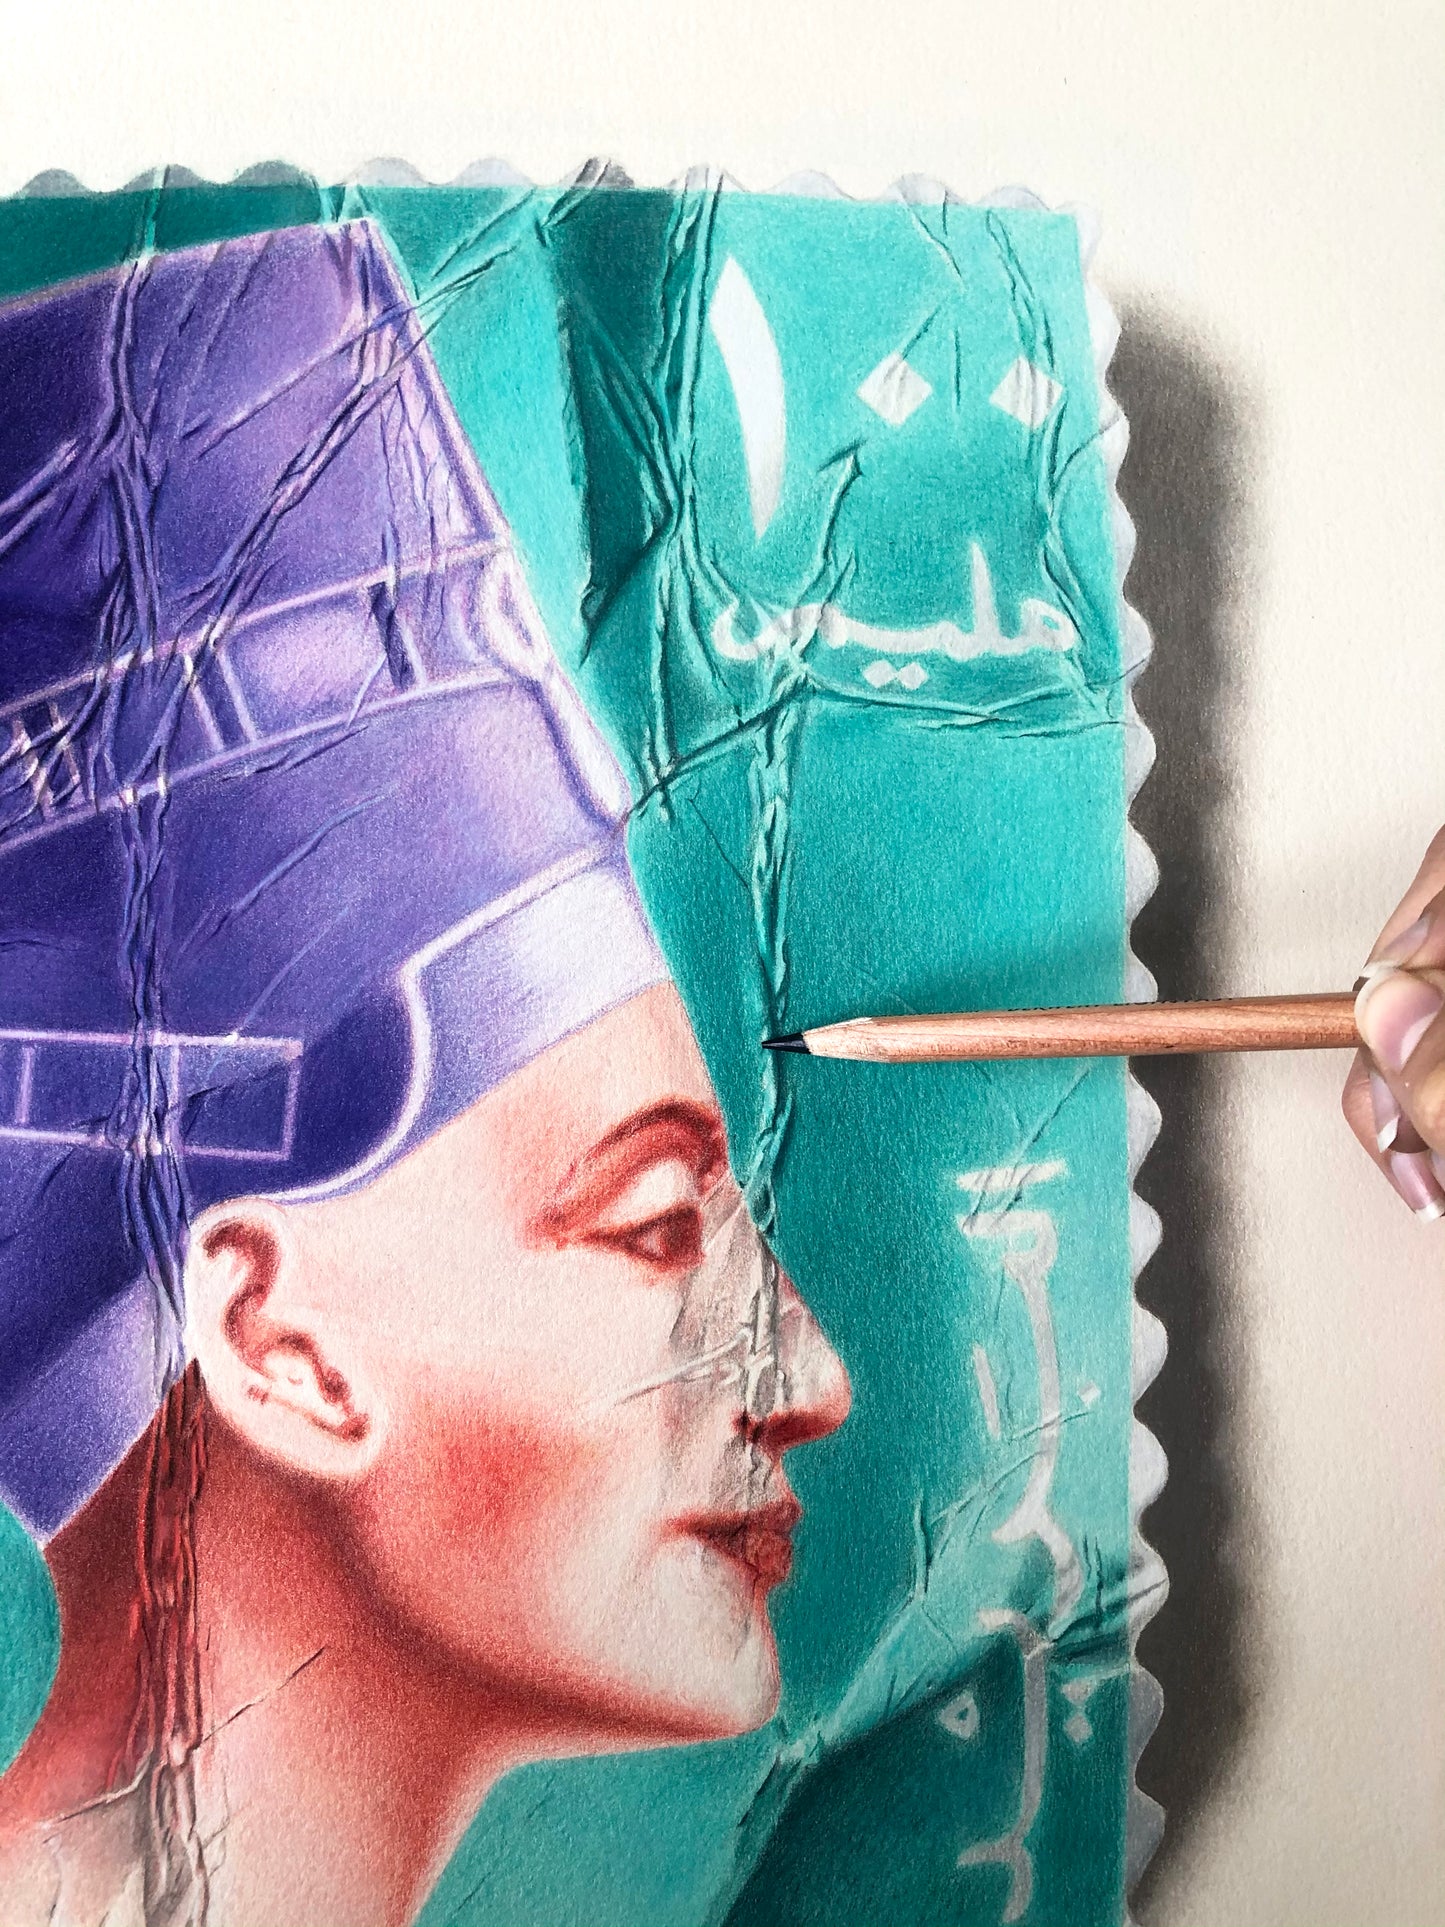 Queen Nefertiti's stamp